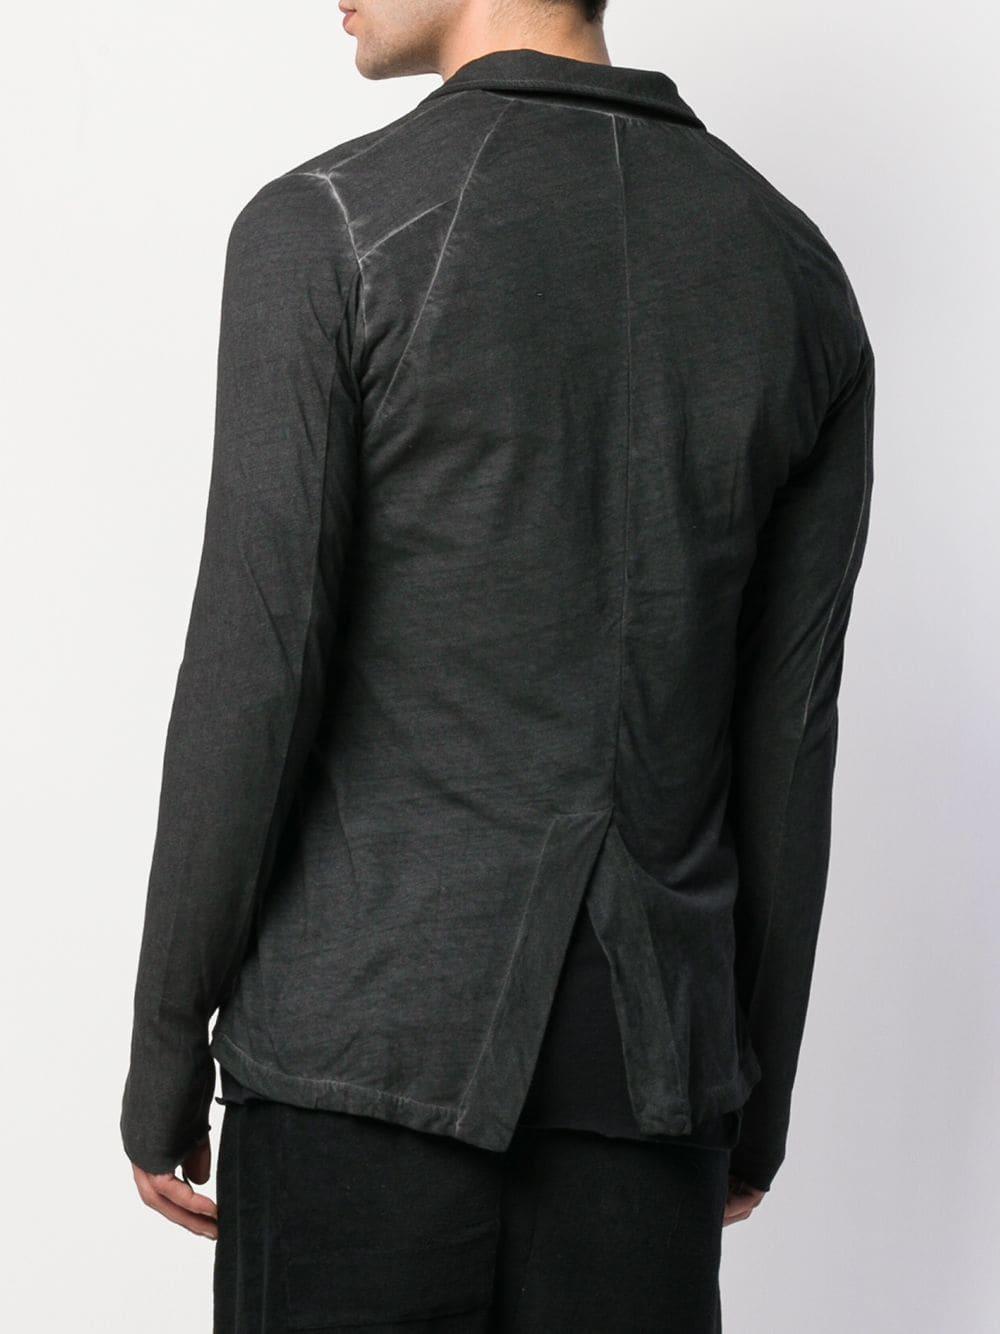 Thom Krom Cotton Faded-effect Blazer in Black for Men - Lyst